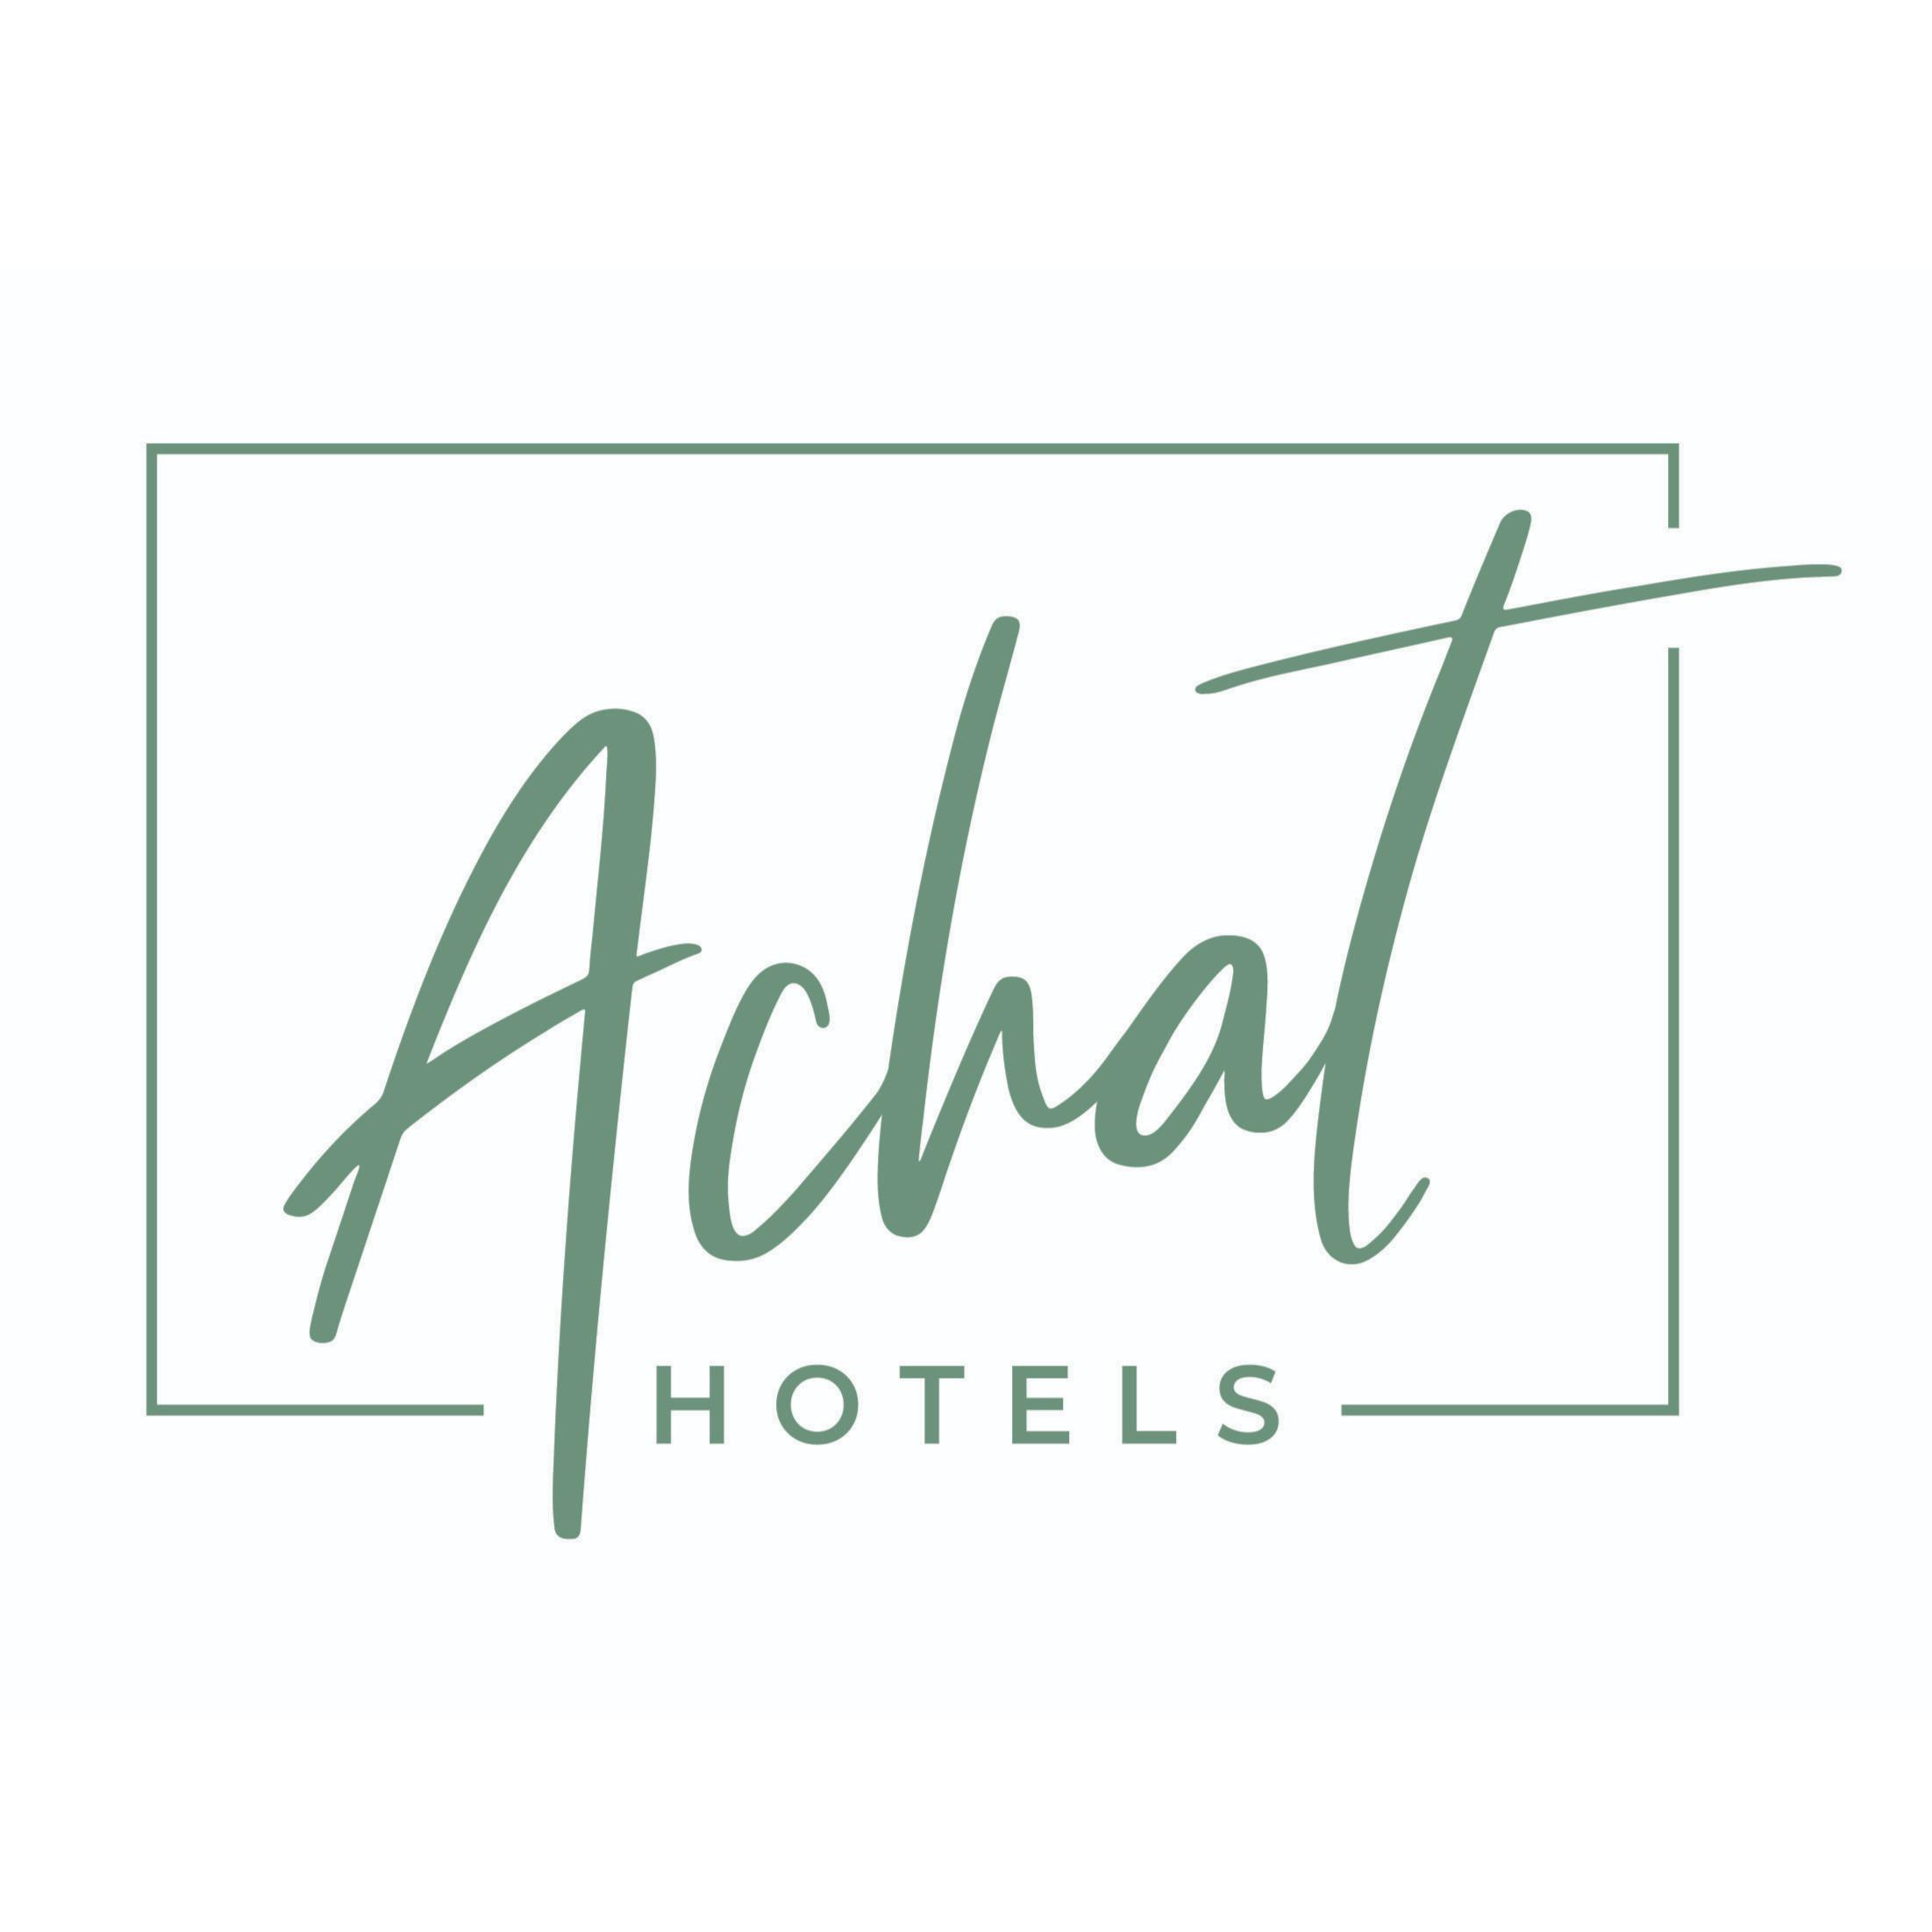 ACHAT Hotel Bochum Dortmund in Bochum - Logo